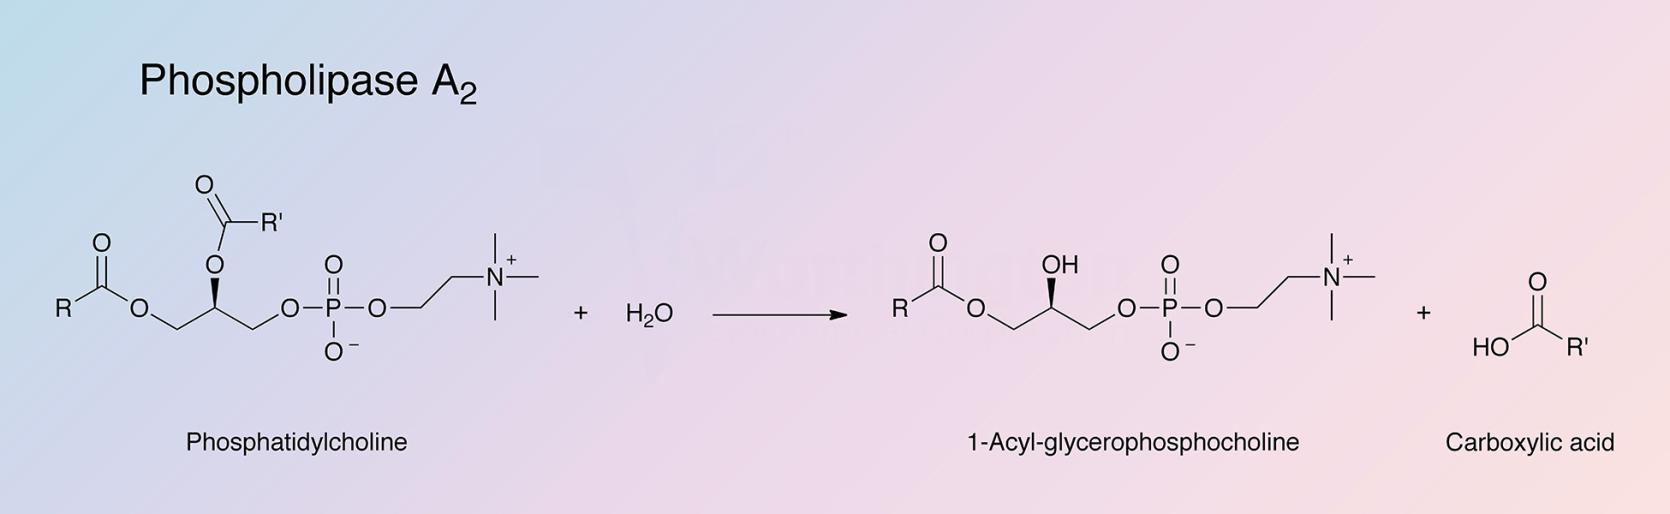 Phospholipase A2 Enzymatic Reaction